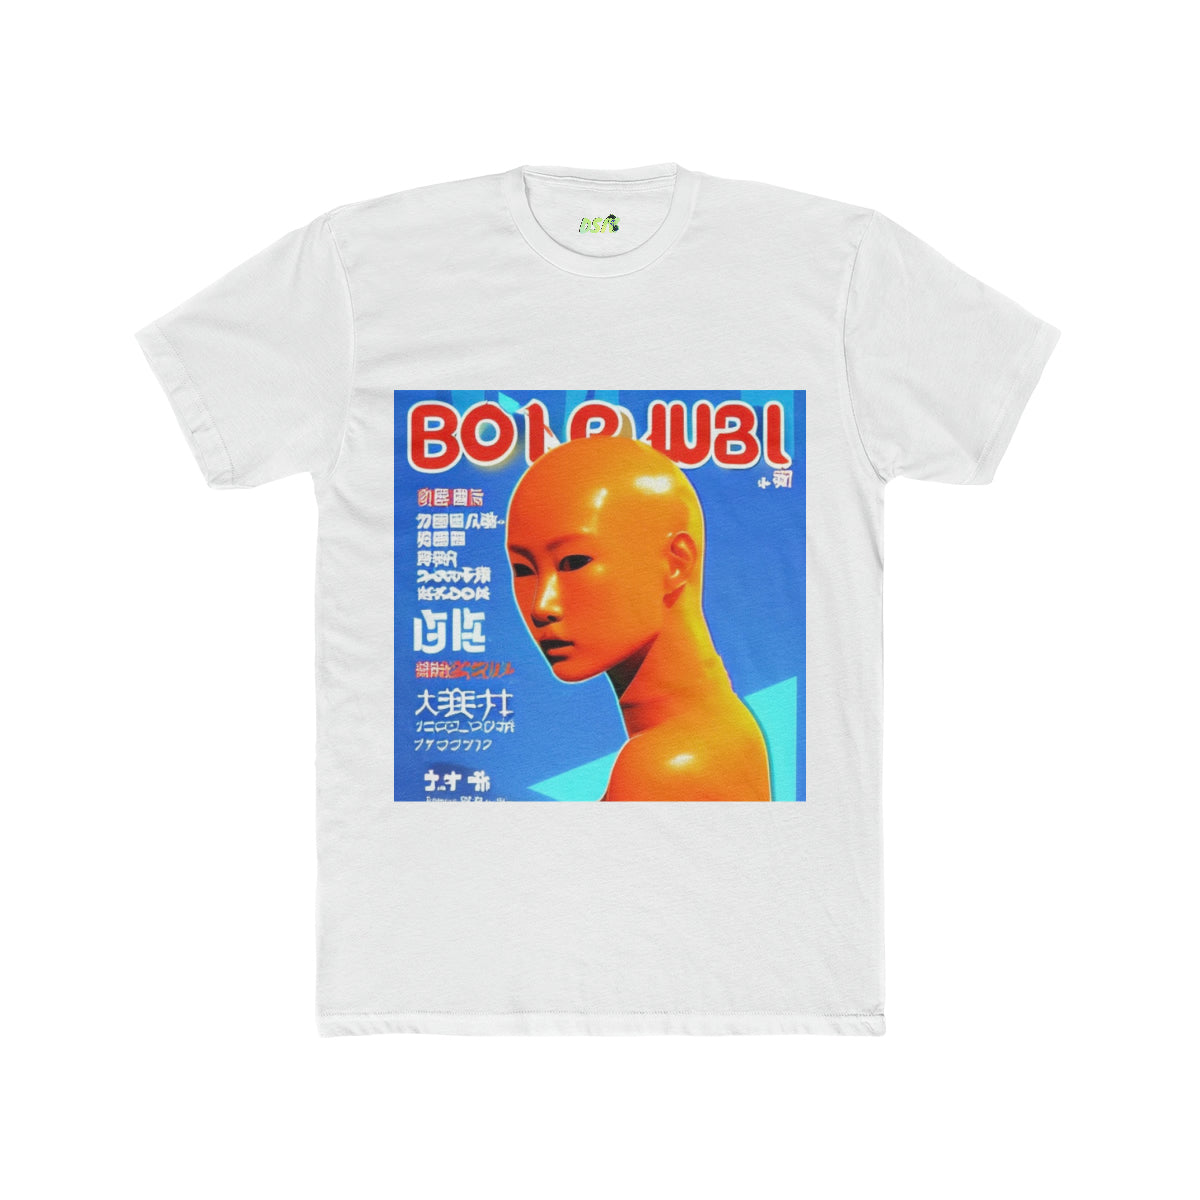 BOLEWBI - Made In Orange Lights - Magazine Cover Collection - DSIV